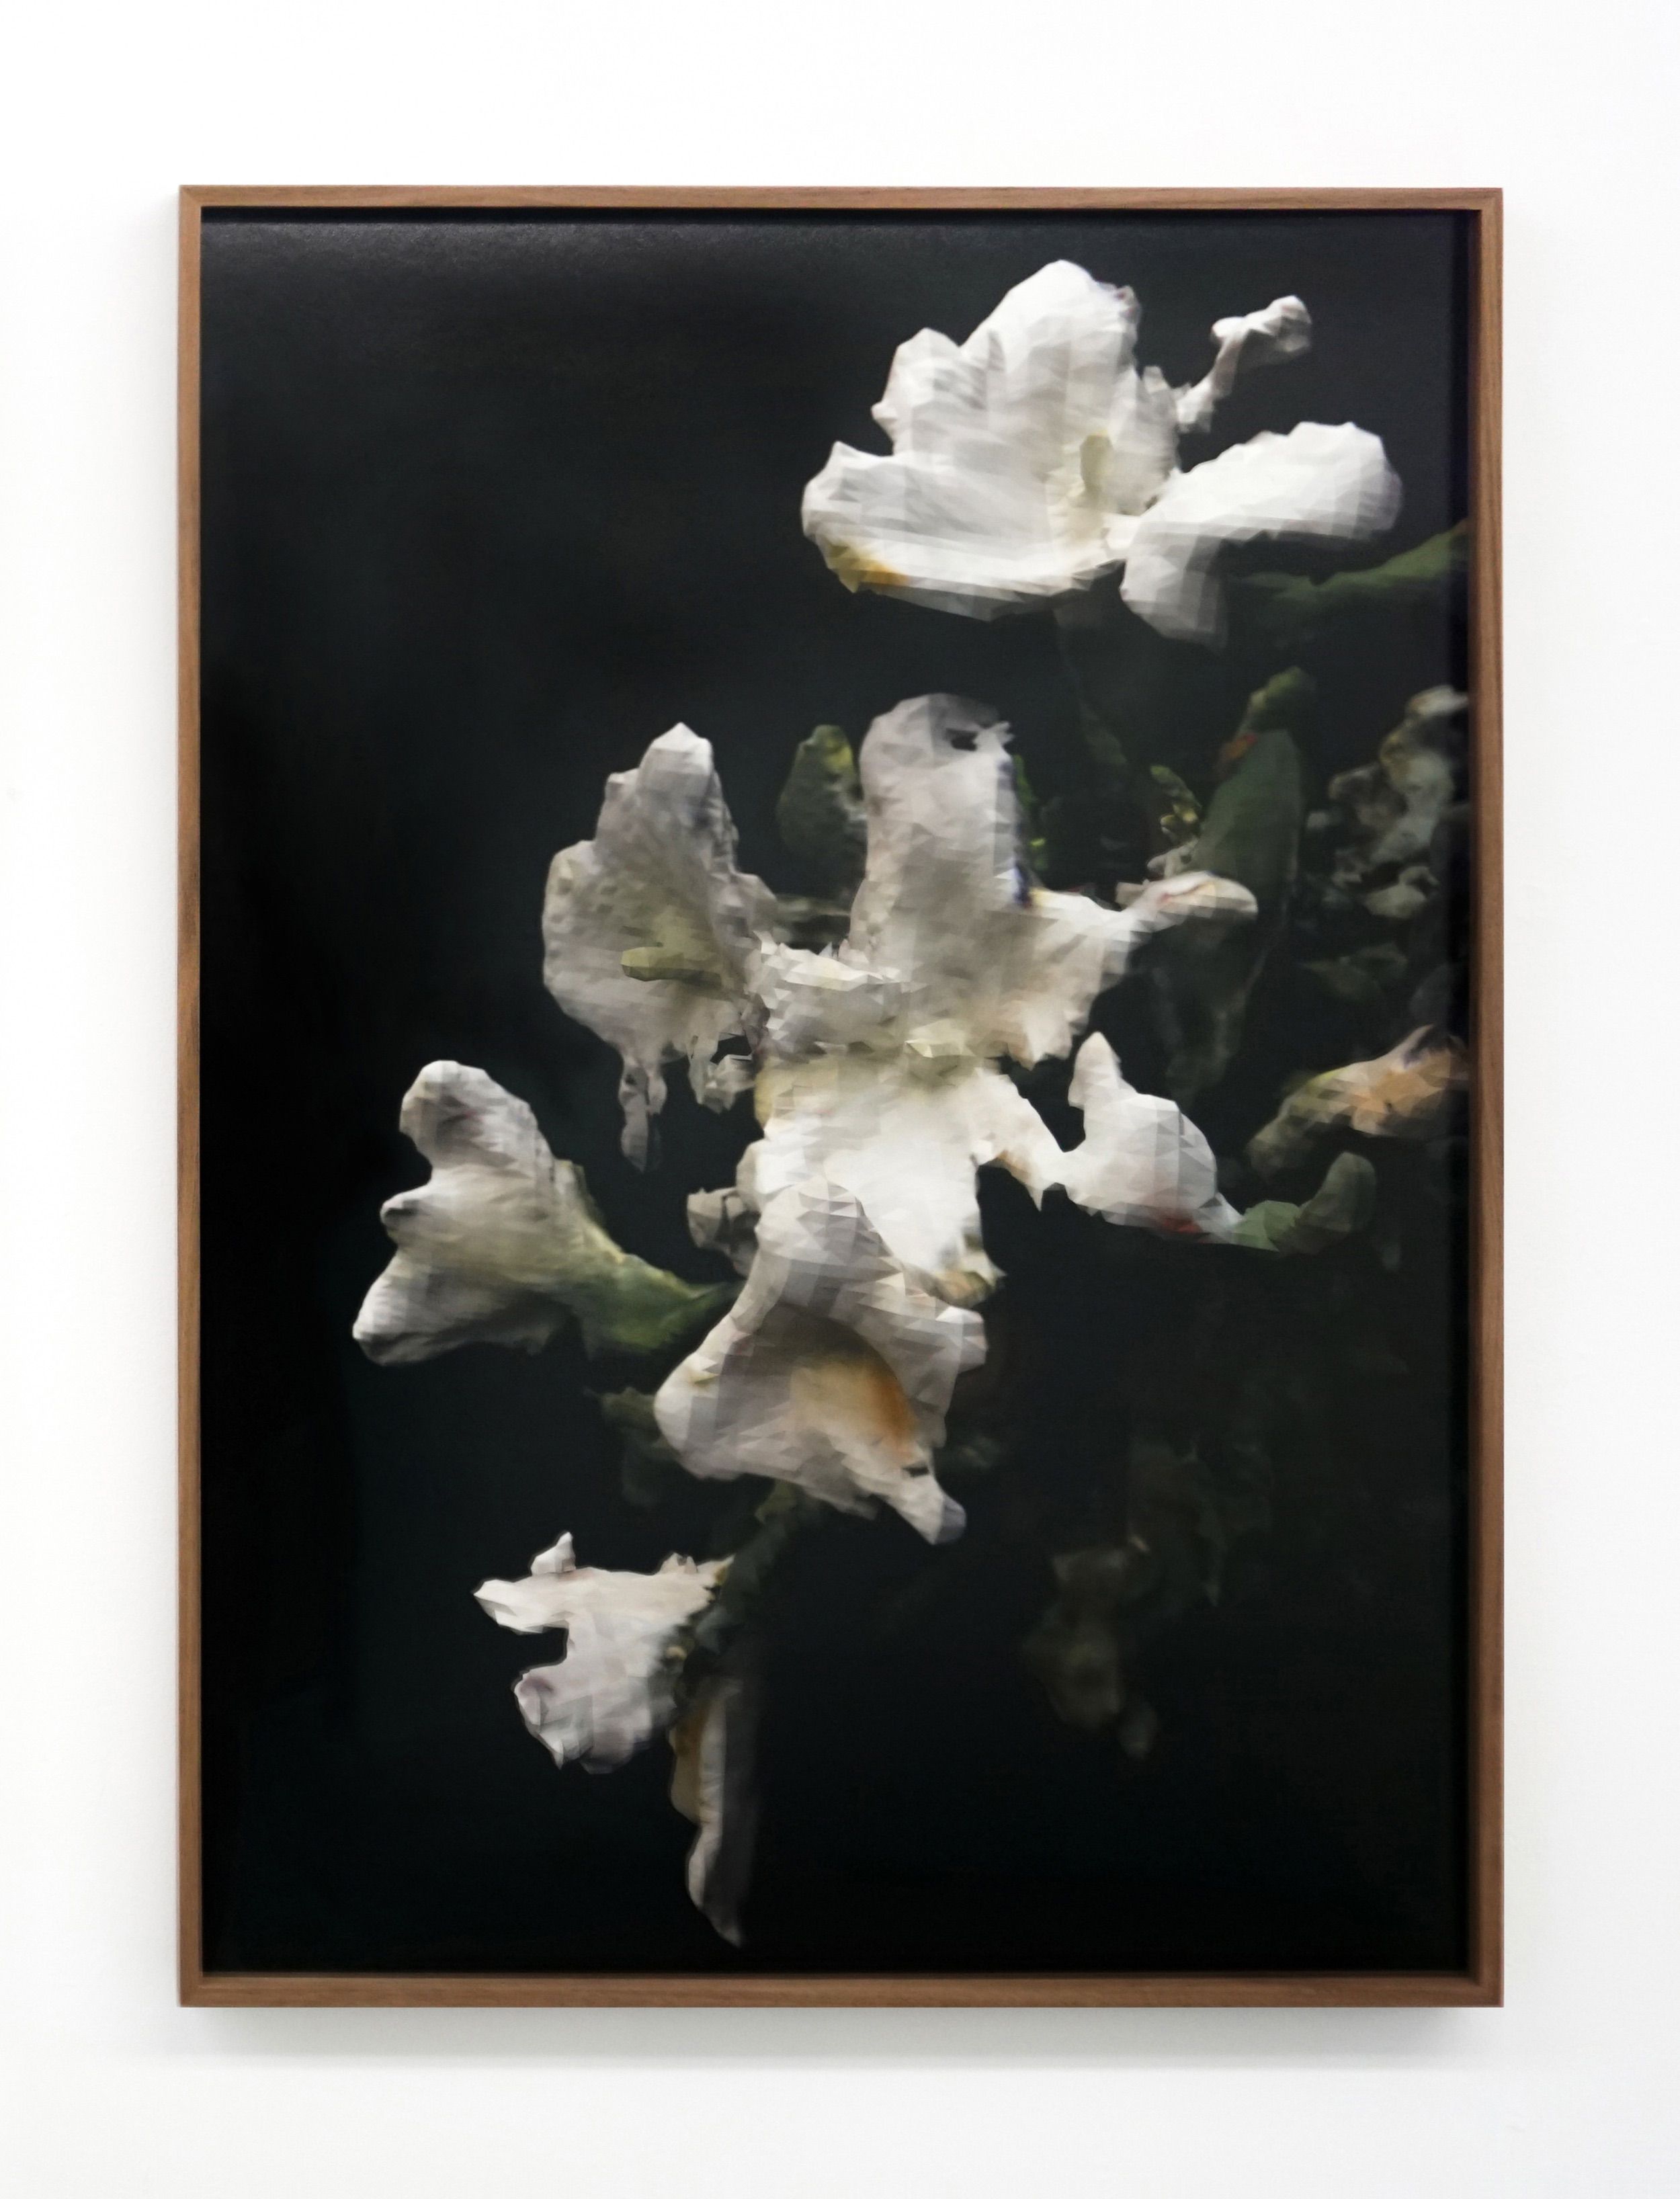  Rhonda Holberton  Lilium Candidum, Rosa ‘Madame A. Meilland’, Alstroemeria (Night II) , 2018 Framed inkjet print 39 x 28 inches Edition 1 of 3 + 2 AP 